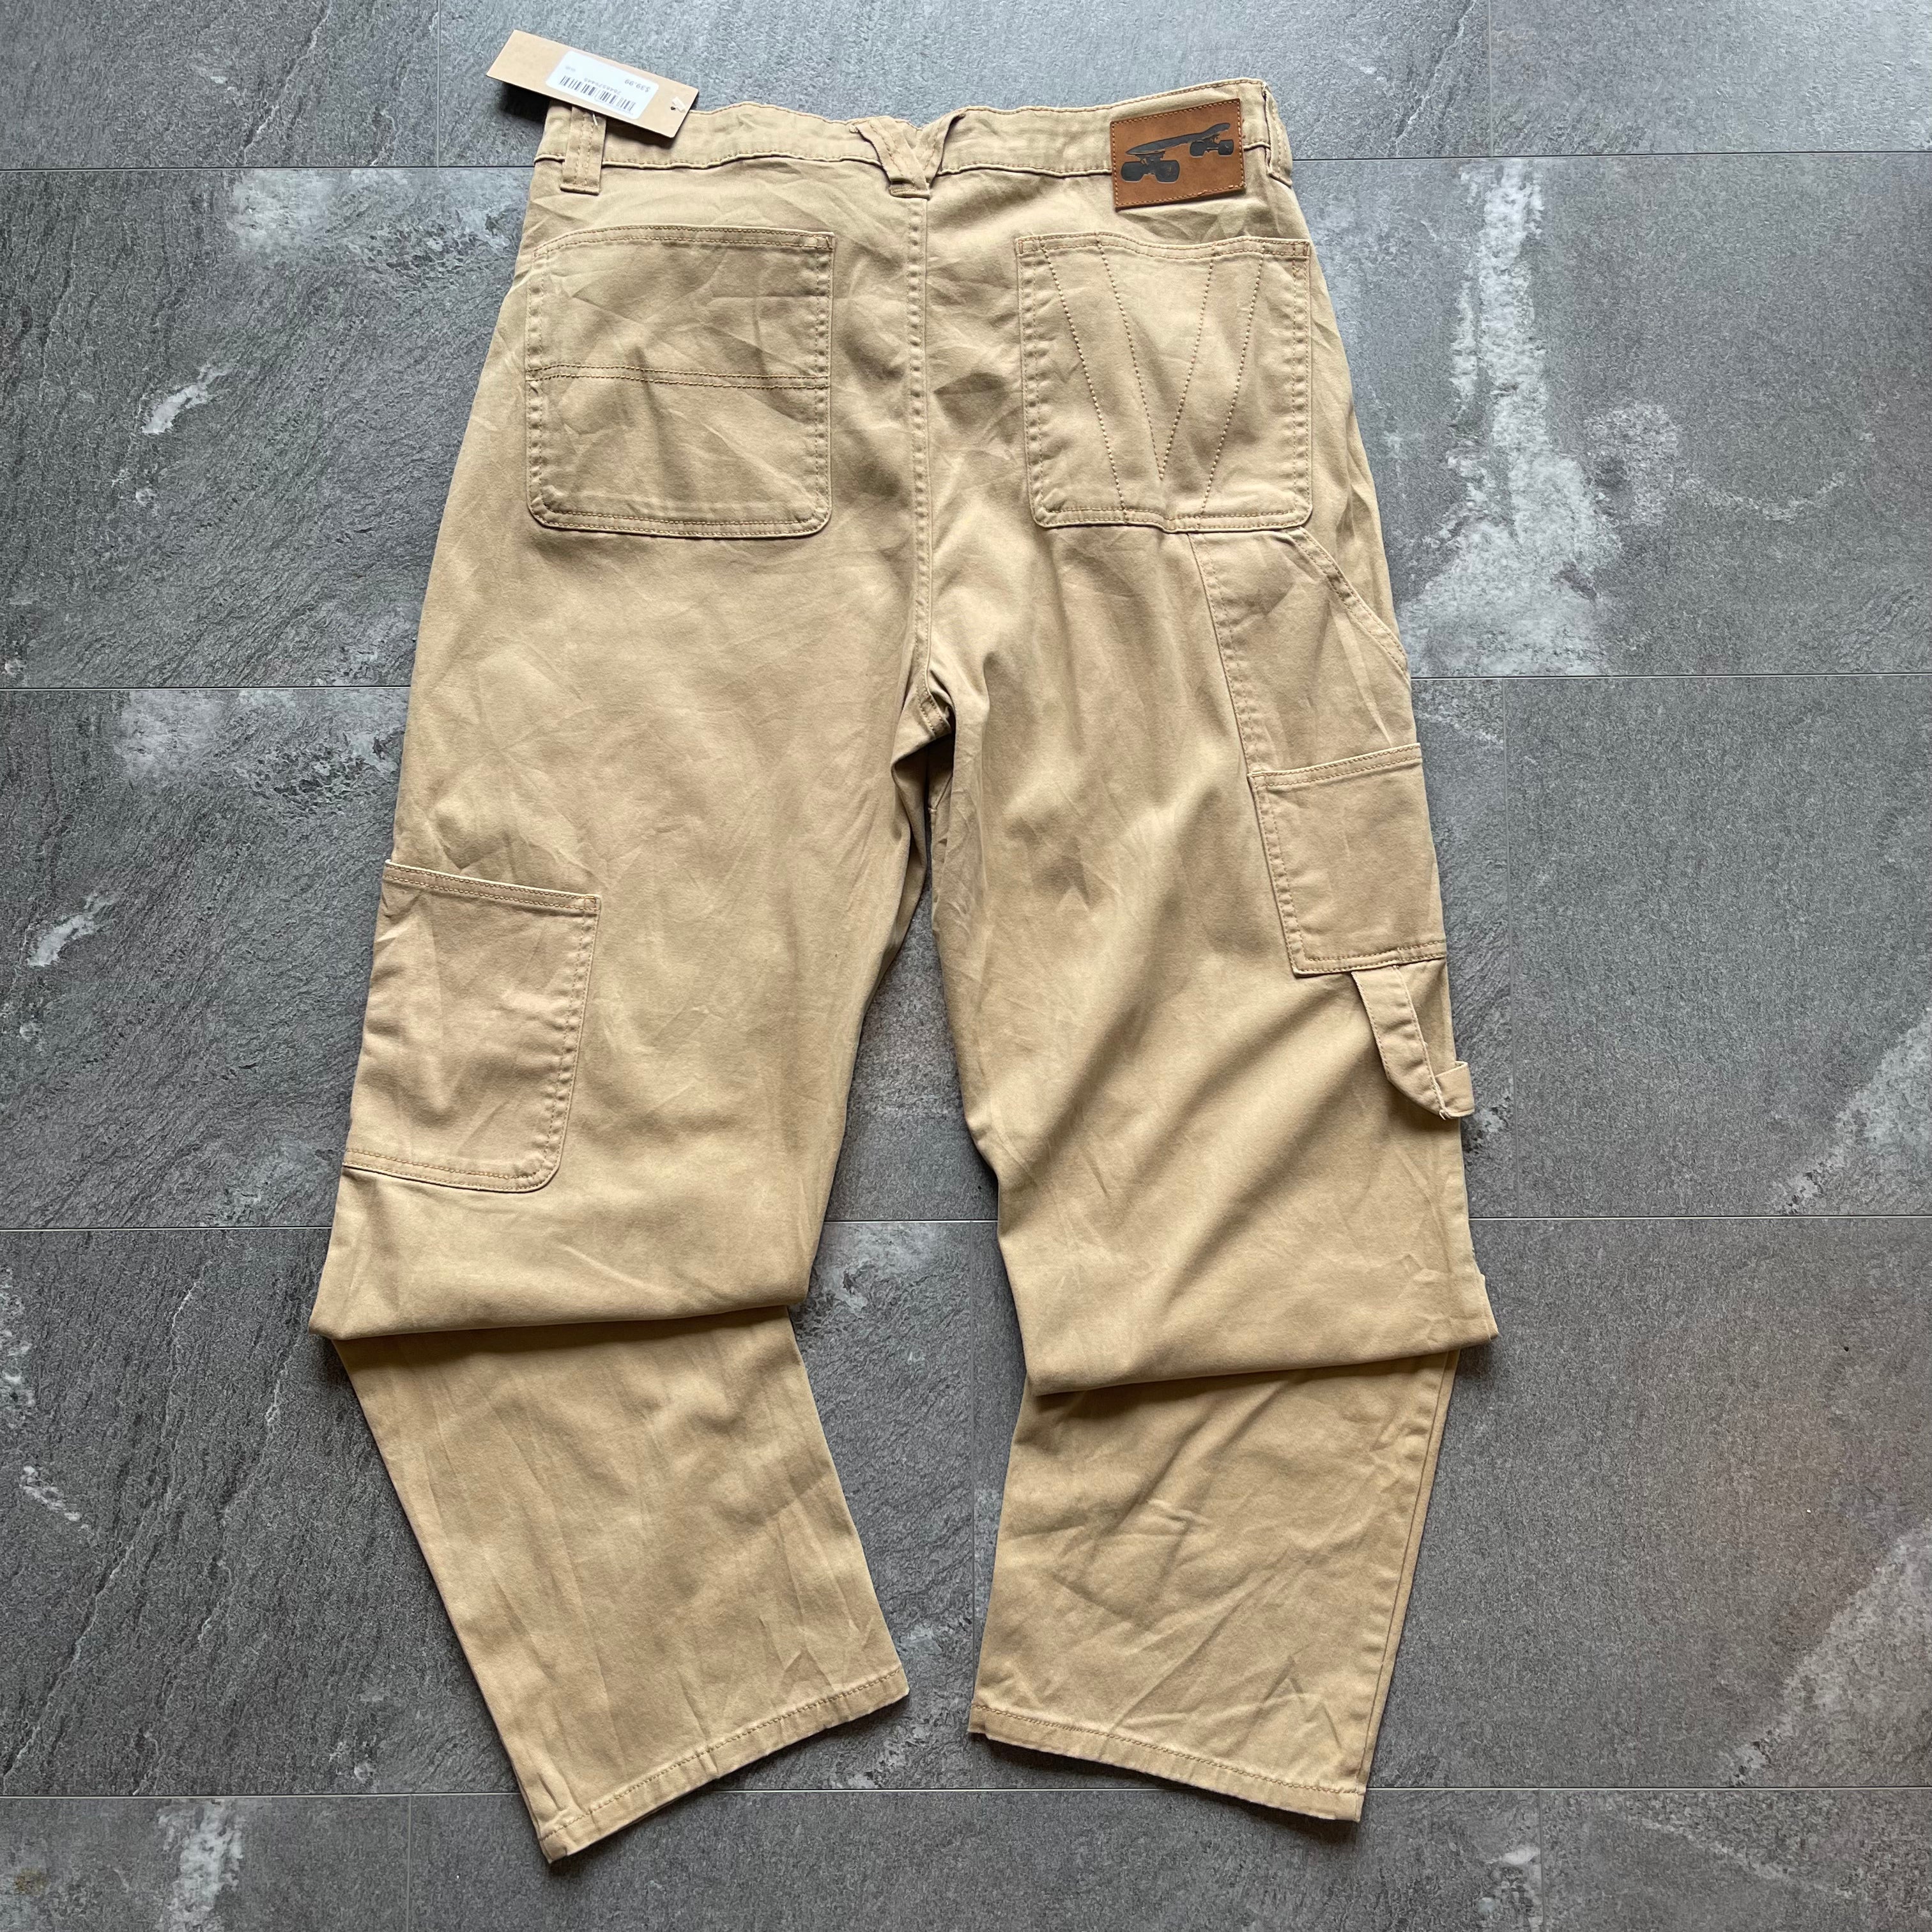 Vintage Vision Street Wear Cargo Pants - Size 34x29